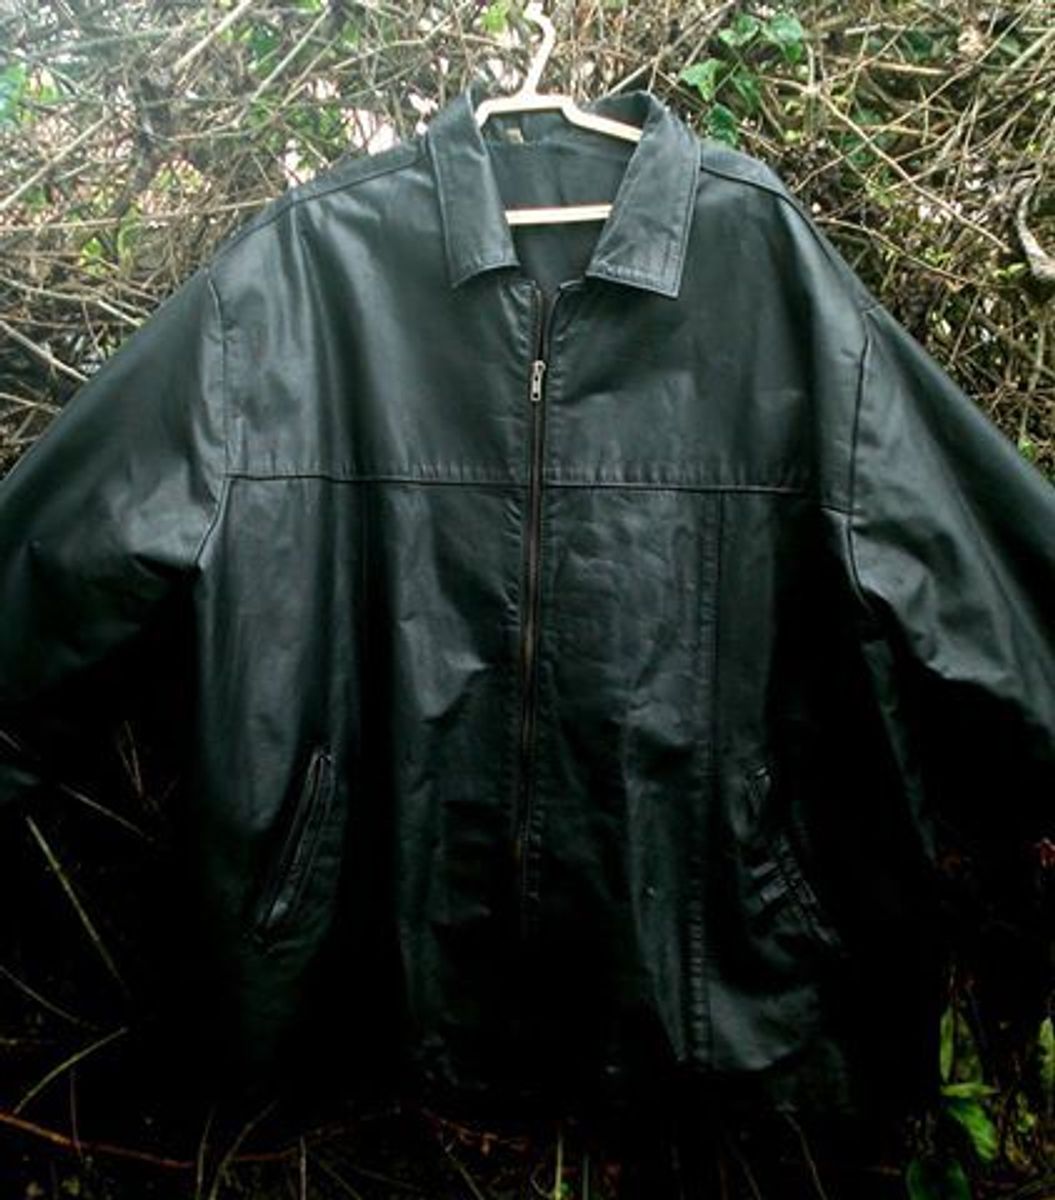 jaqueta de couro masculina gg